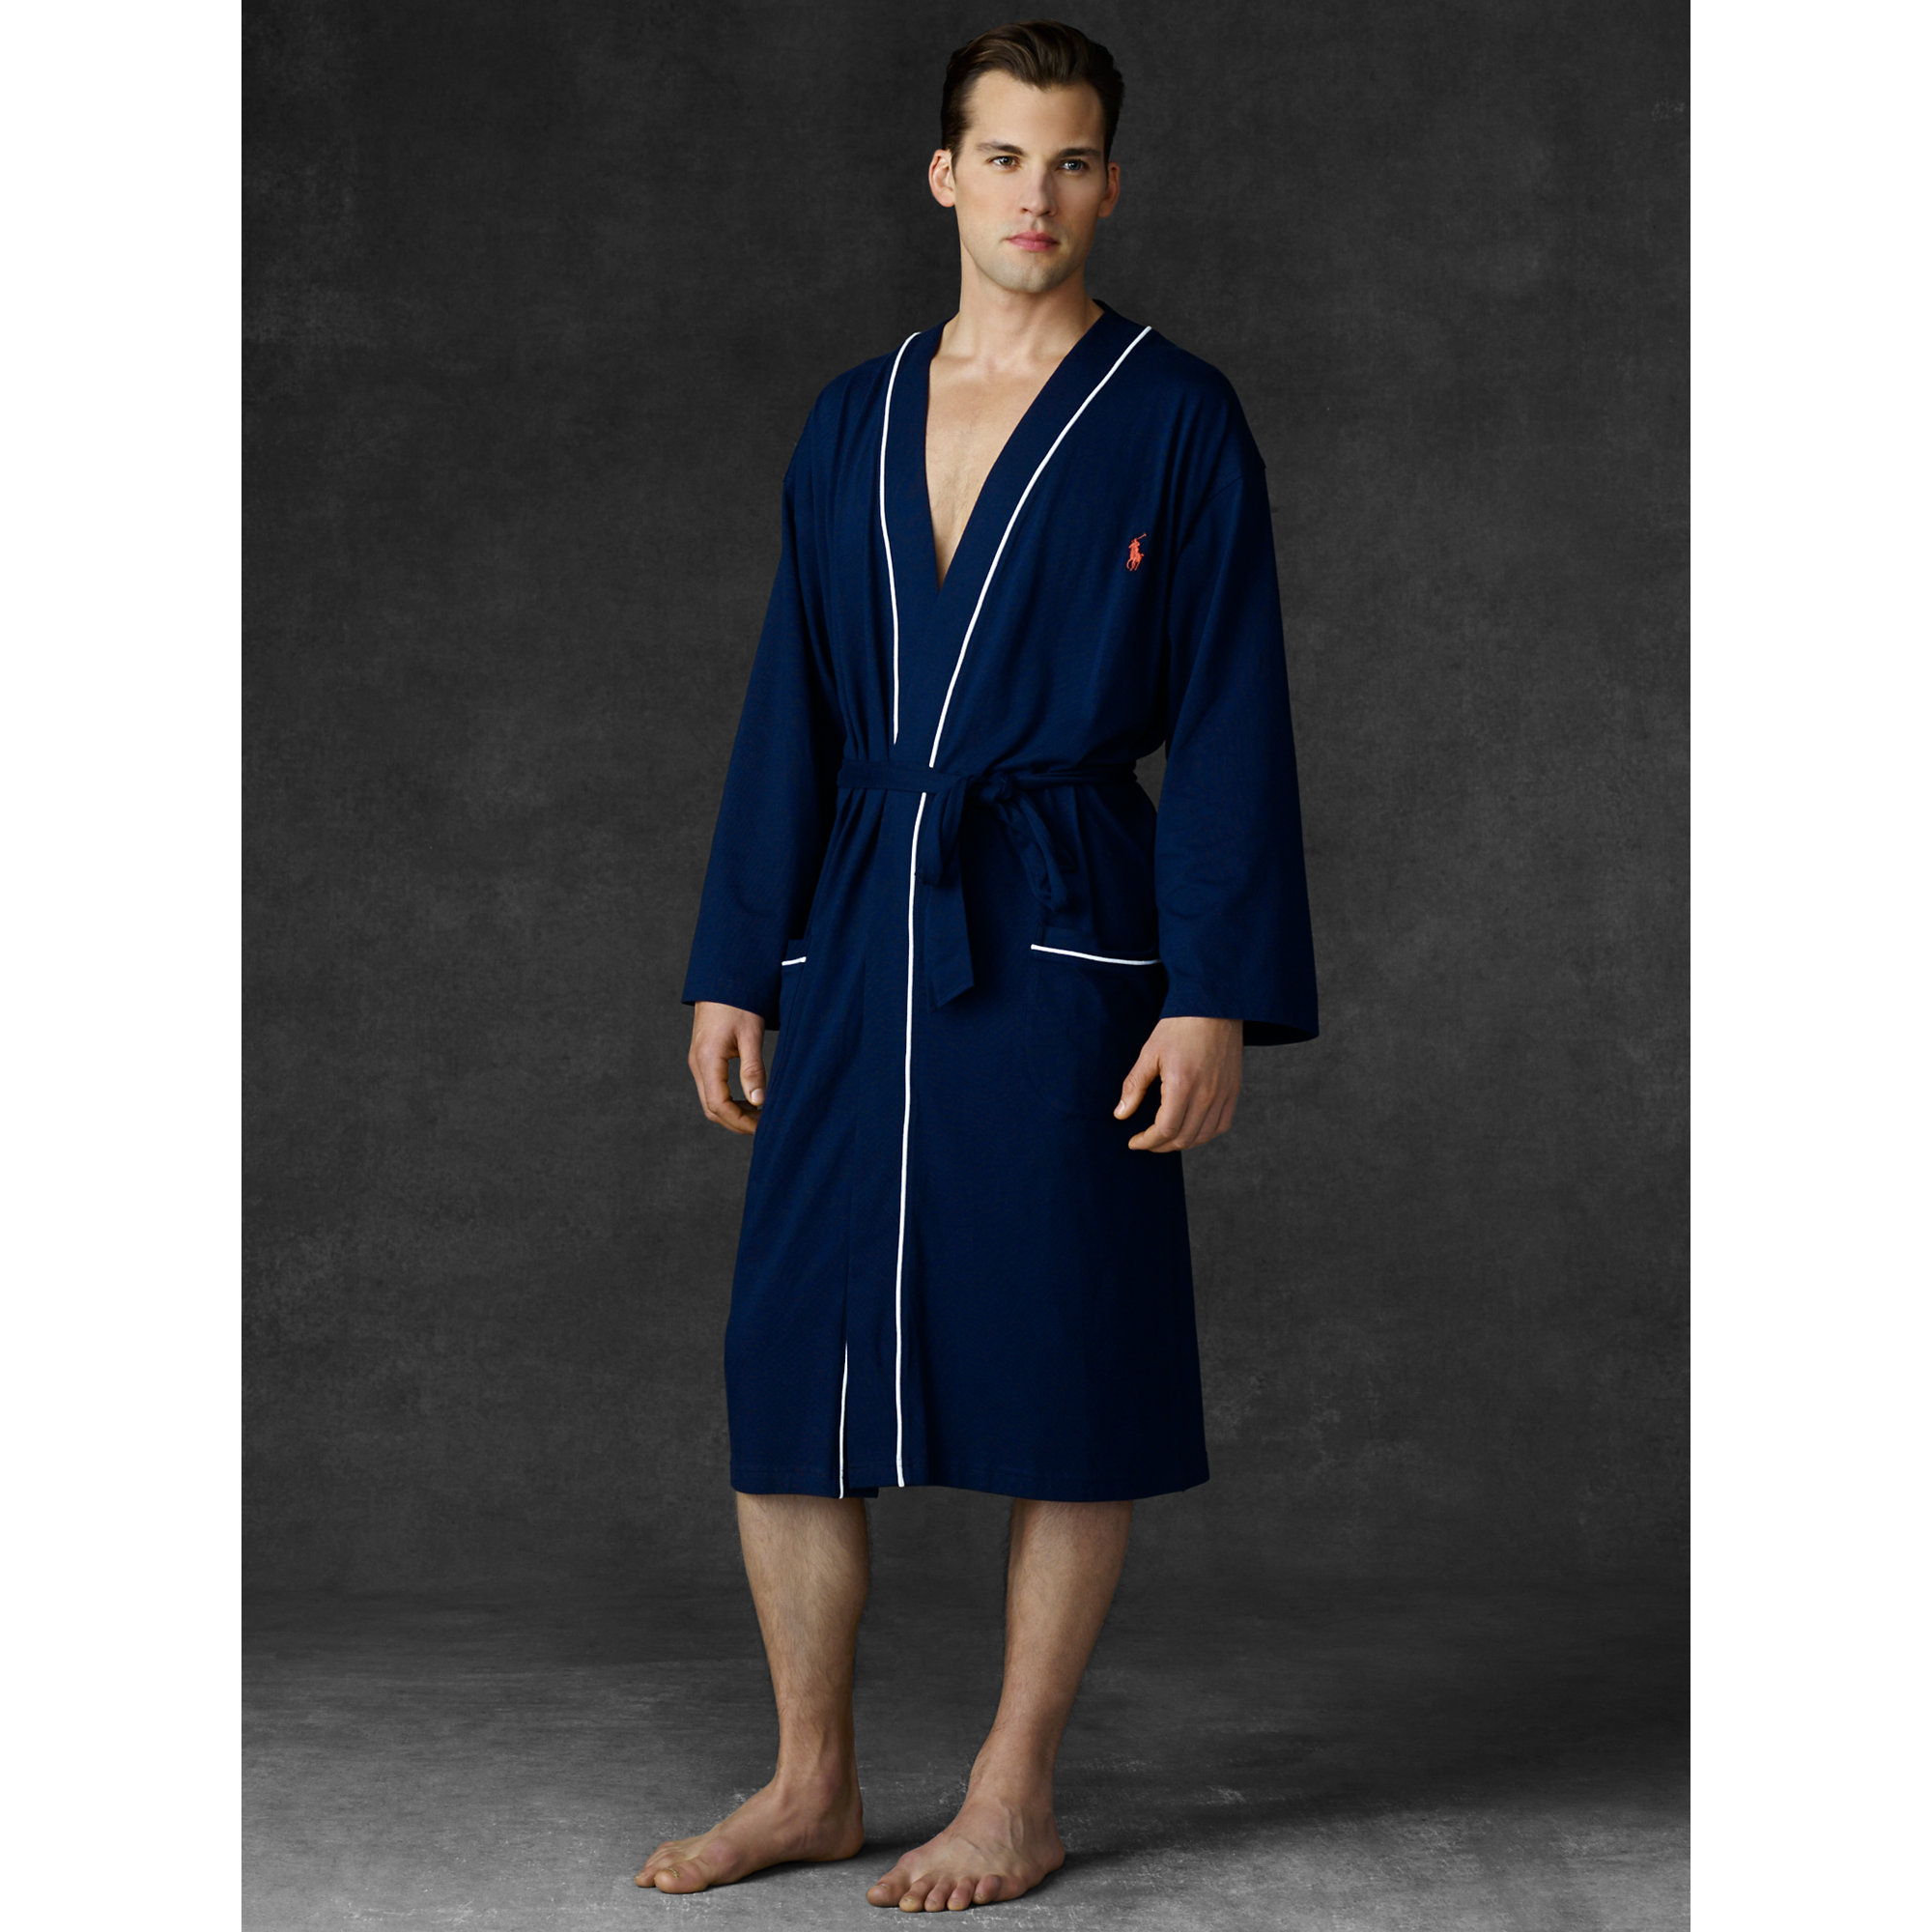 polo kimono robe